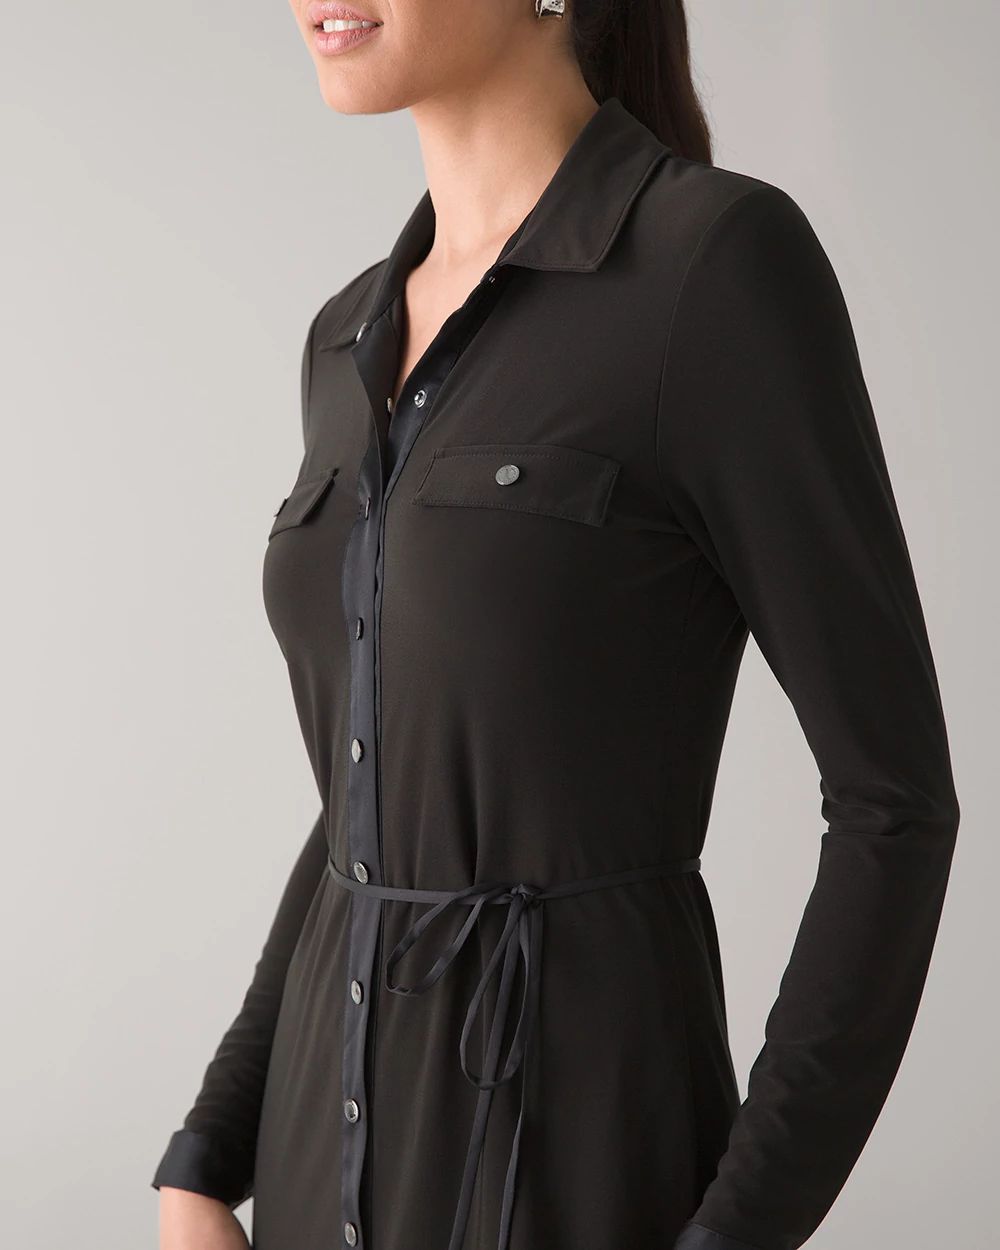 Petite Long-Sleeve Matte Jersey Shirtdress click to view larger image.